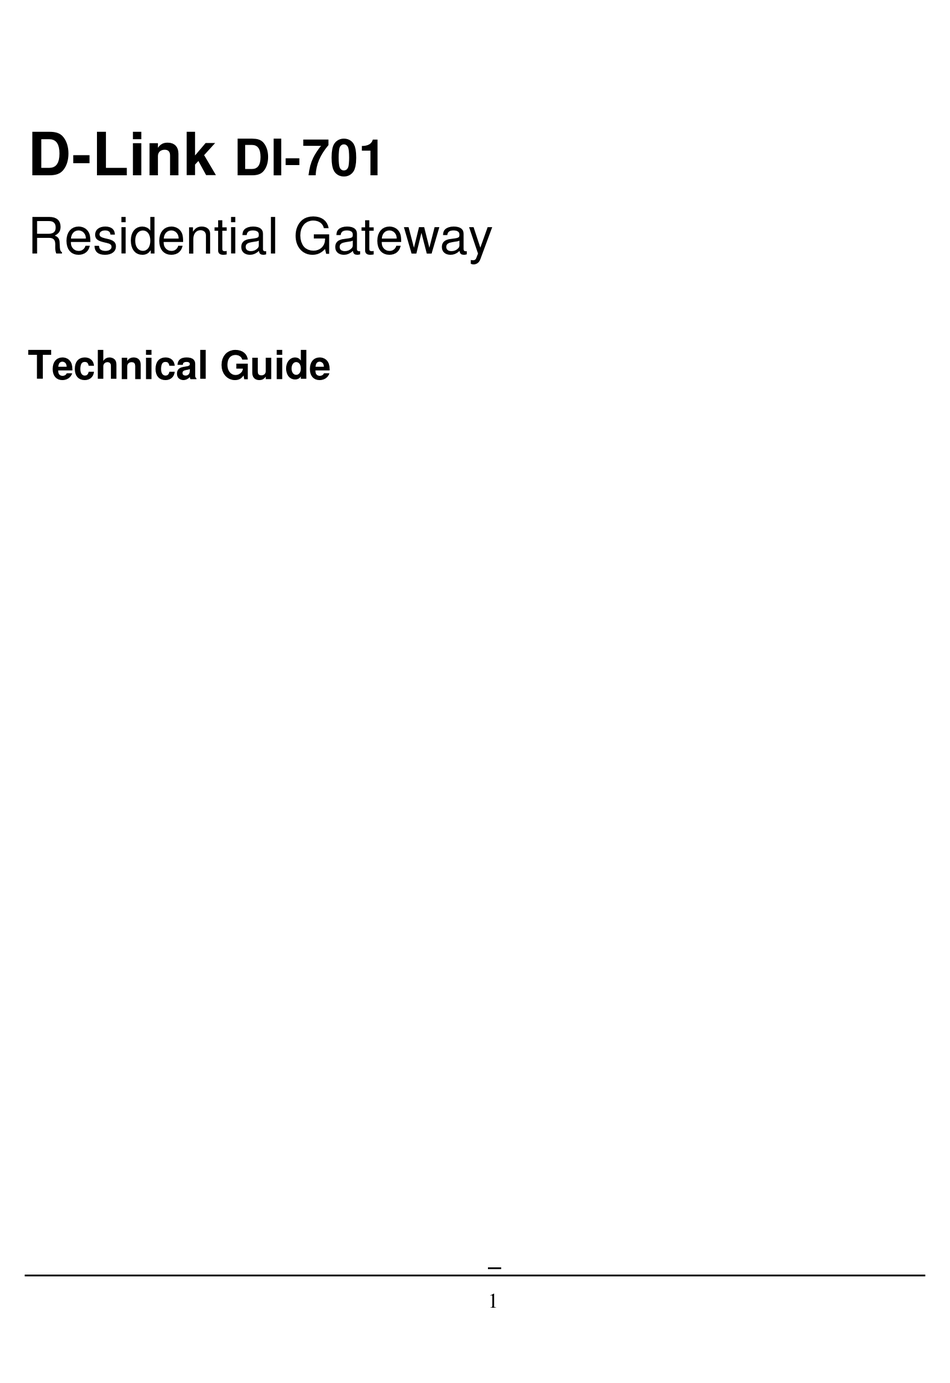 D-LINK DI-701 GATEWAY TECHNICAL MANUAL | ManualsLib